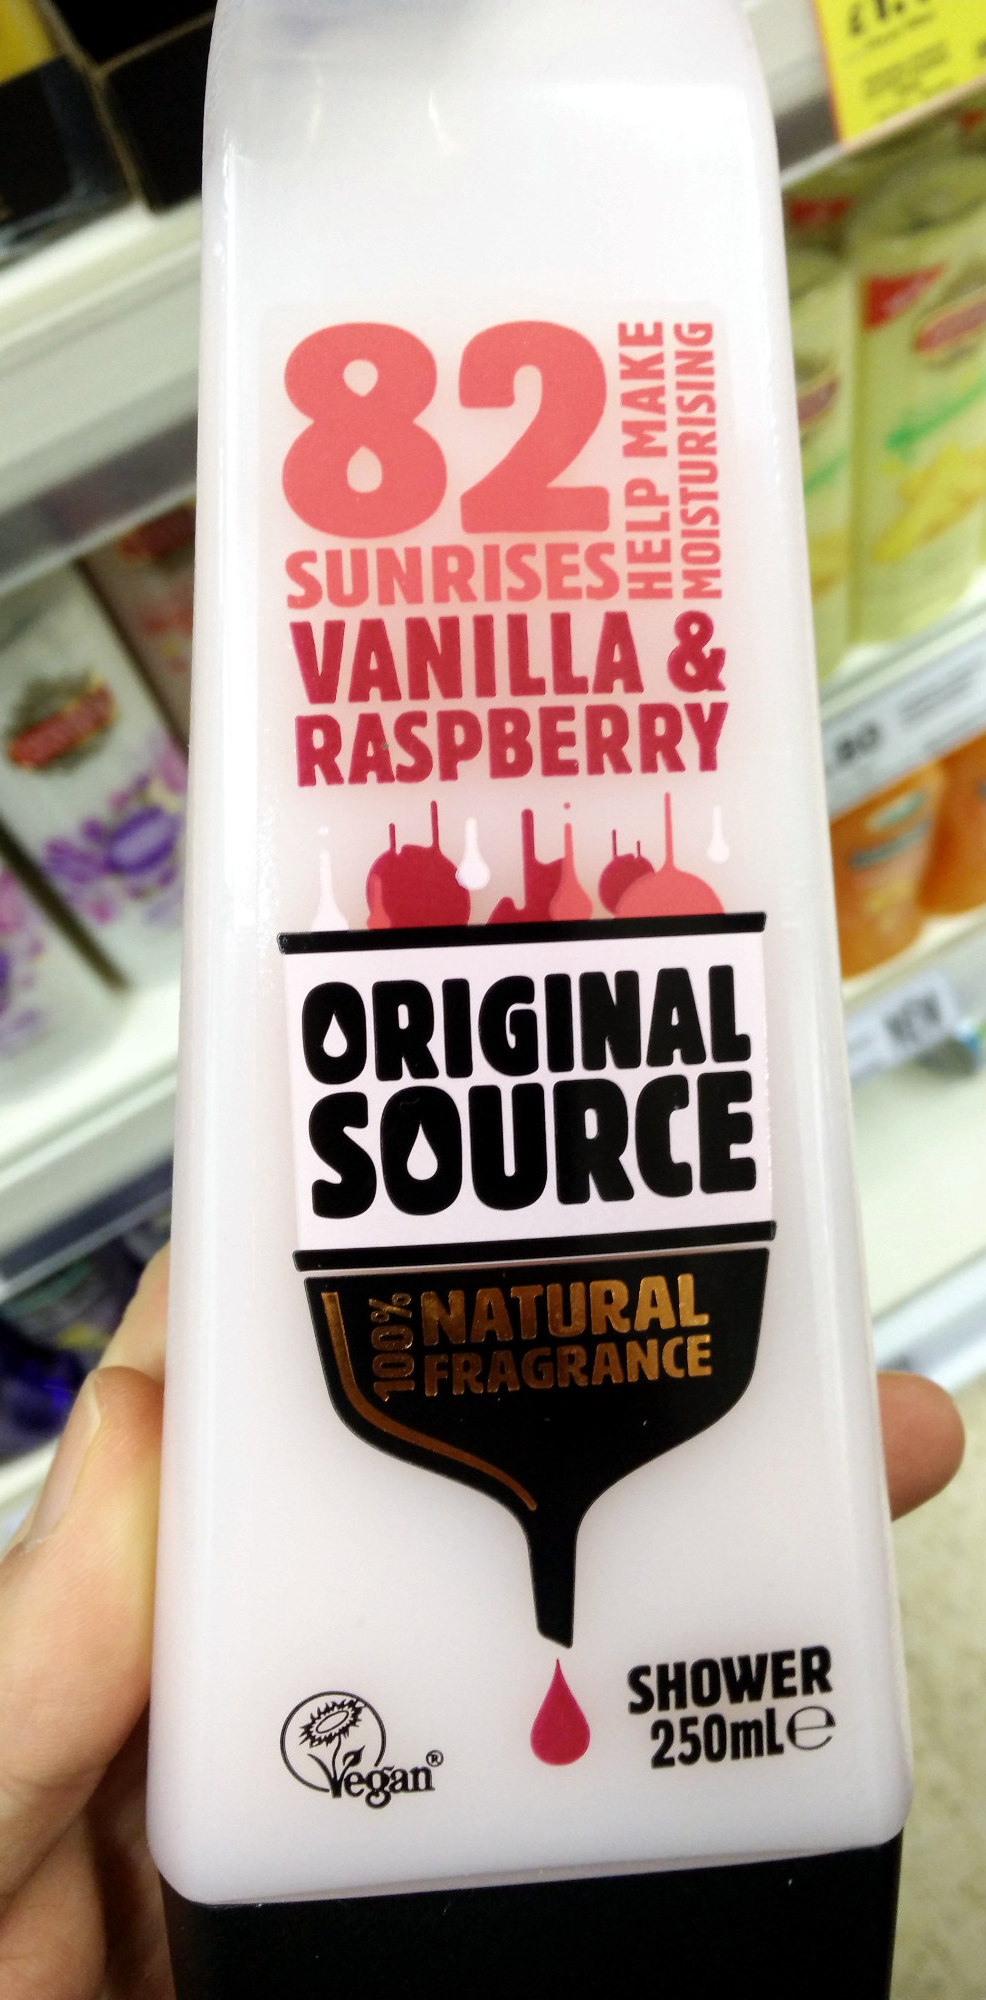 82 sunrises Vanilla & Raspberry - Product - en